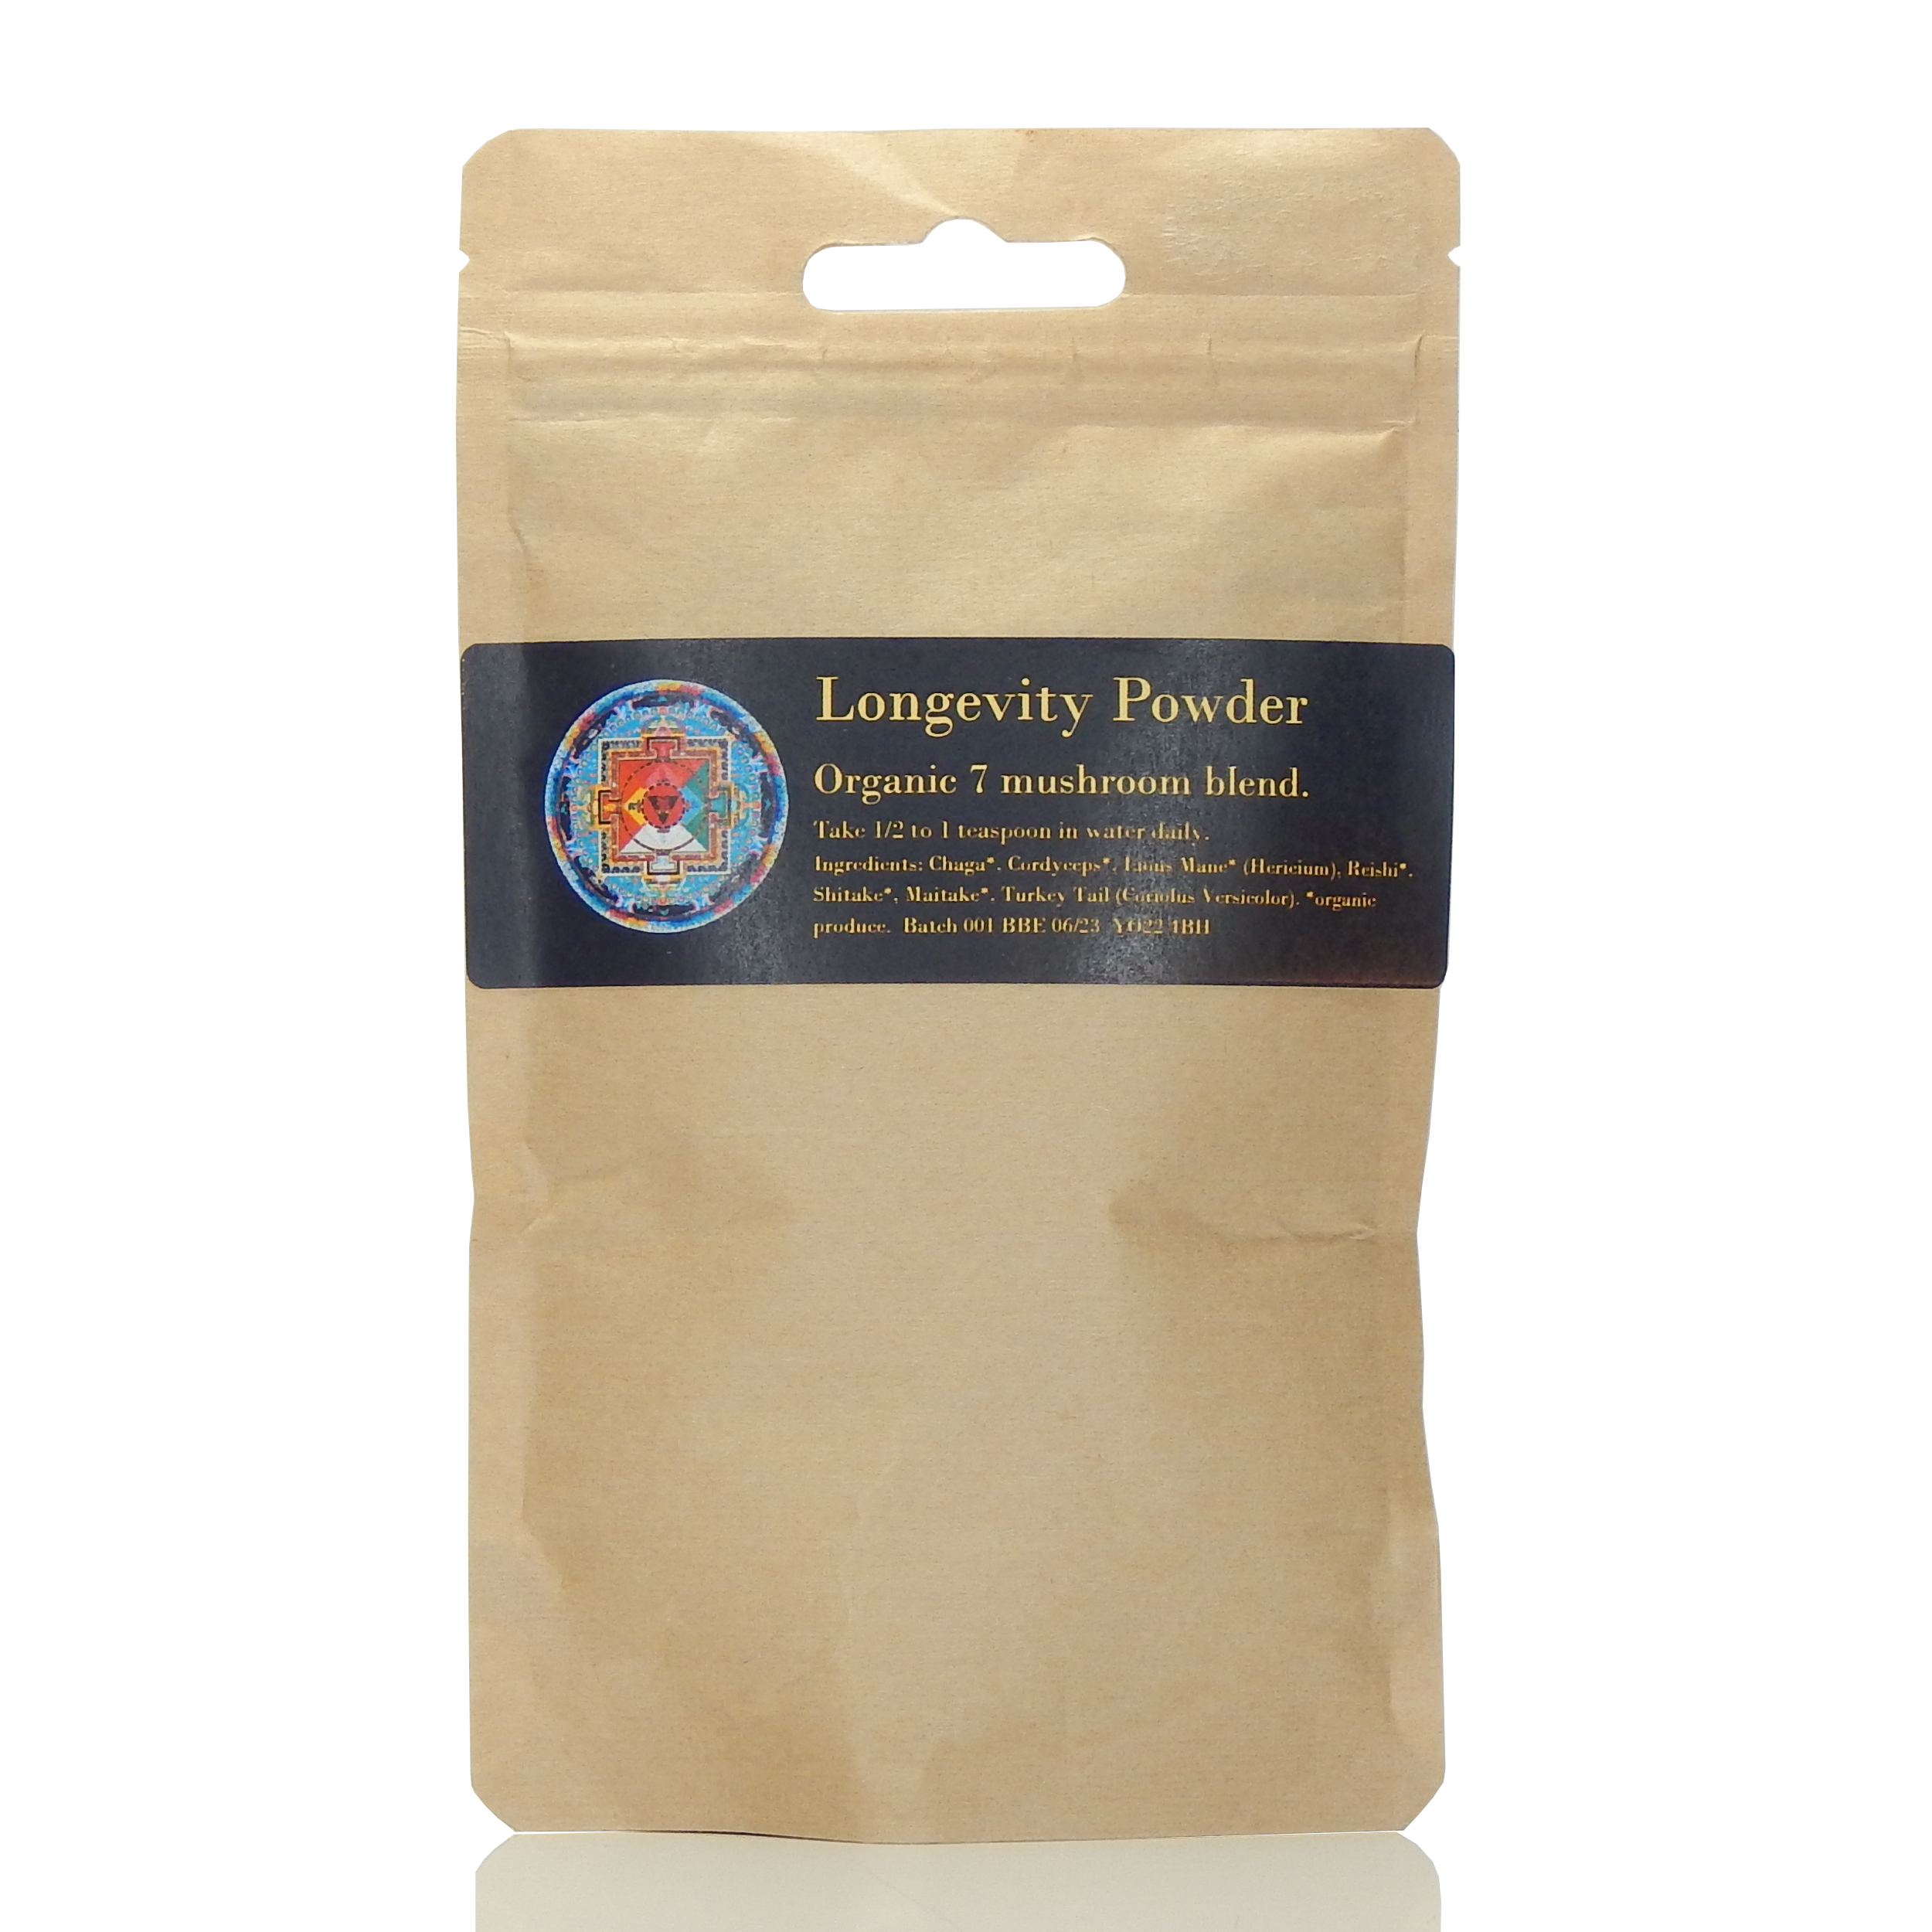 Longevity - Organic 7 Mushroom Blend Powder